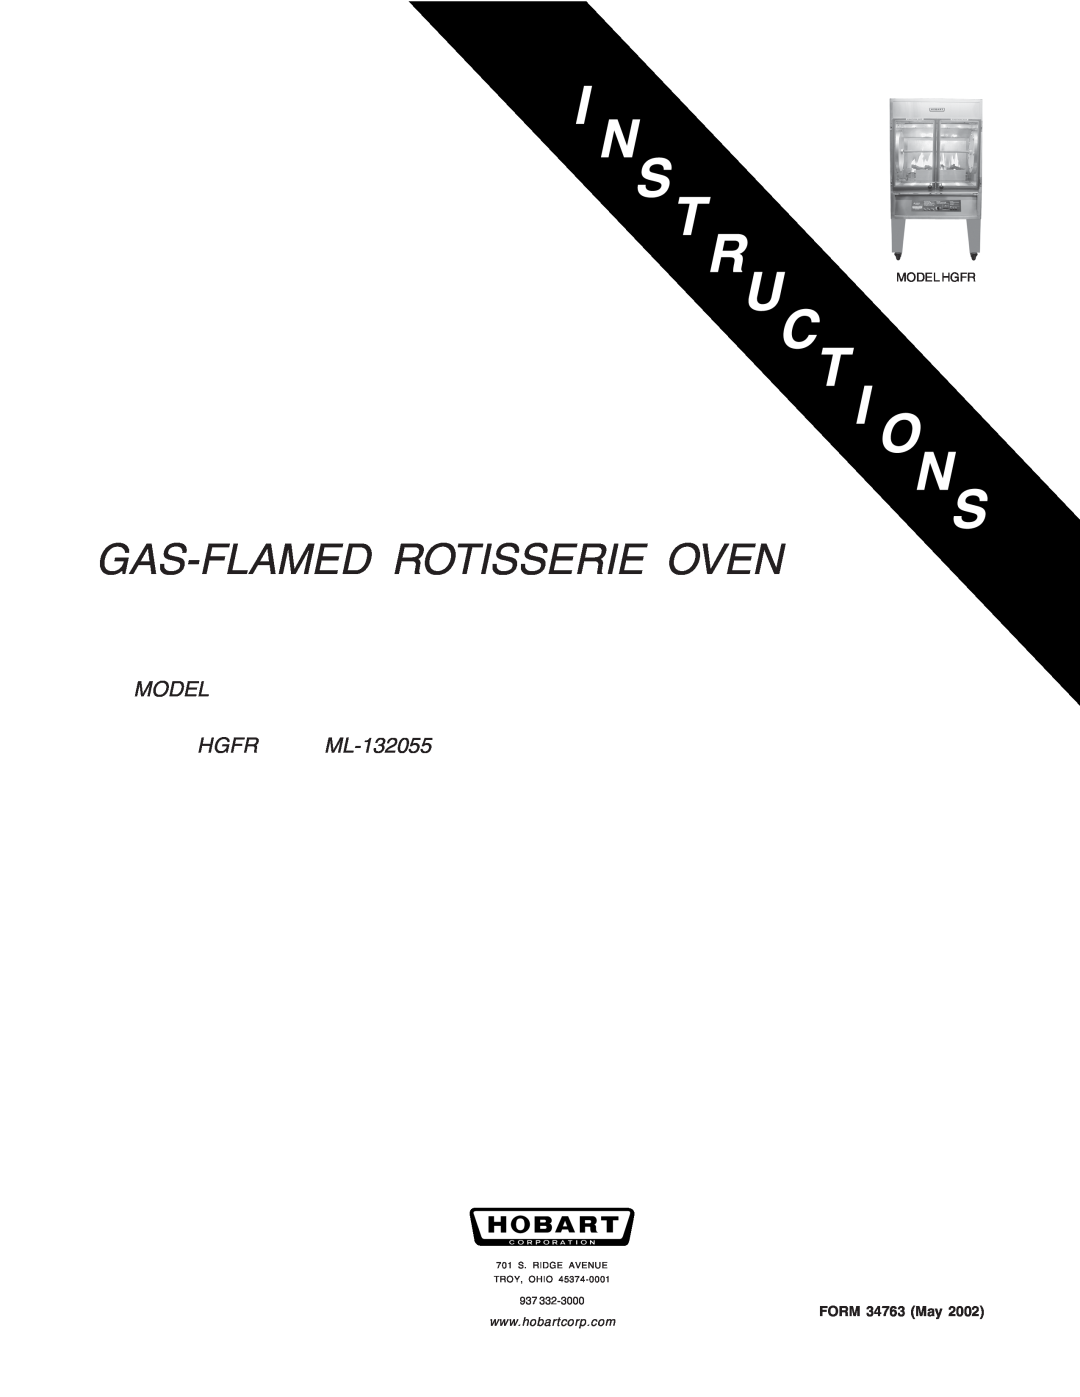 Hobart manual Gas-Flamed Rotisserie Oven, MODEL HGFR ML-132055, FORM 34763 May, Model Hgfr 